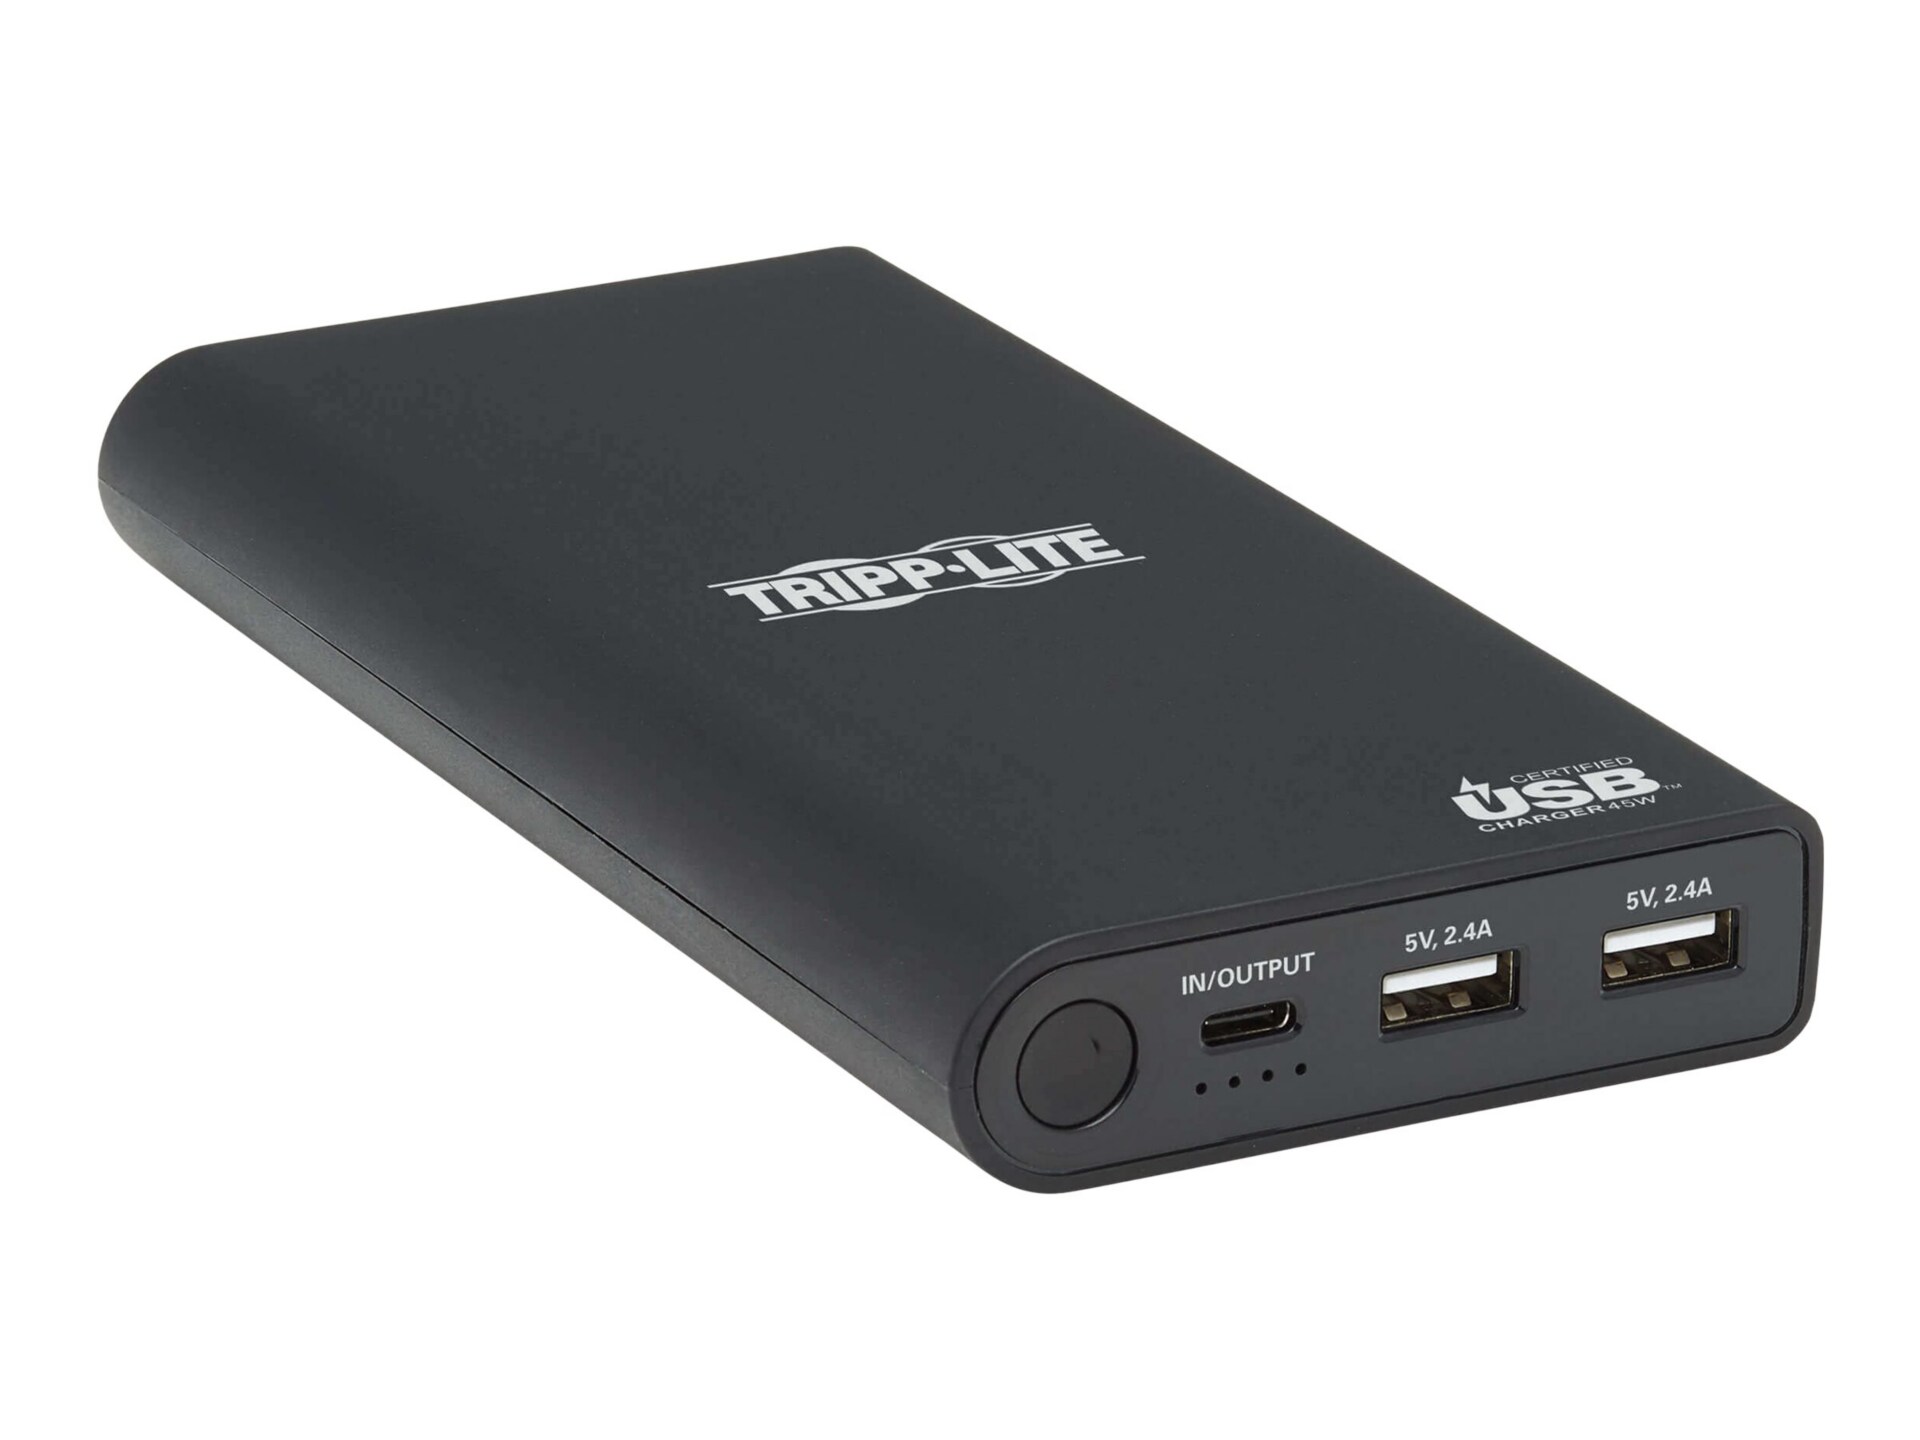 Tripp Lite USB Battery Charger Mobile Power Bank 3-Port 20.1K mAh USB-A/C